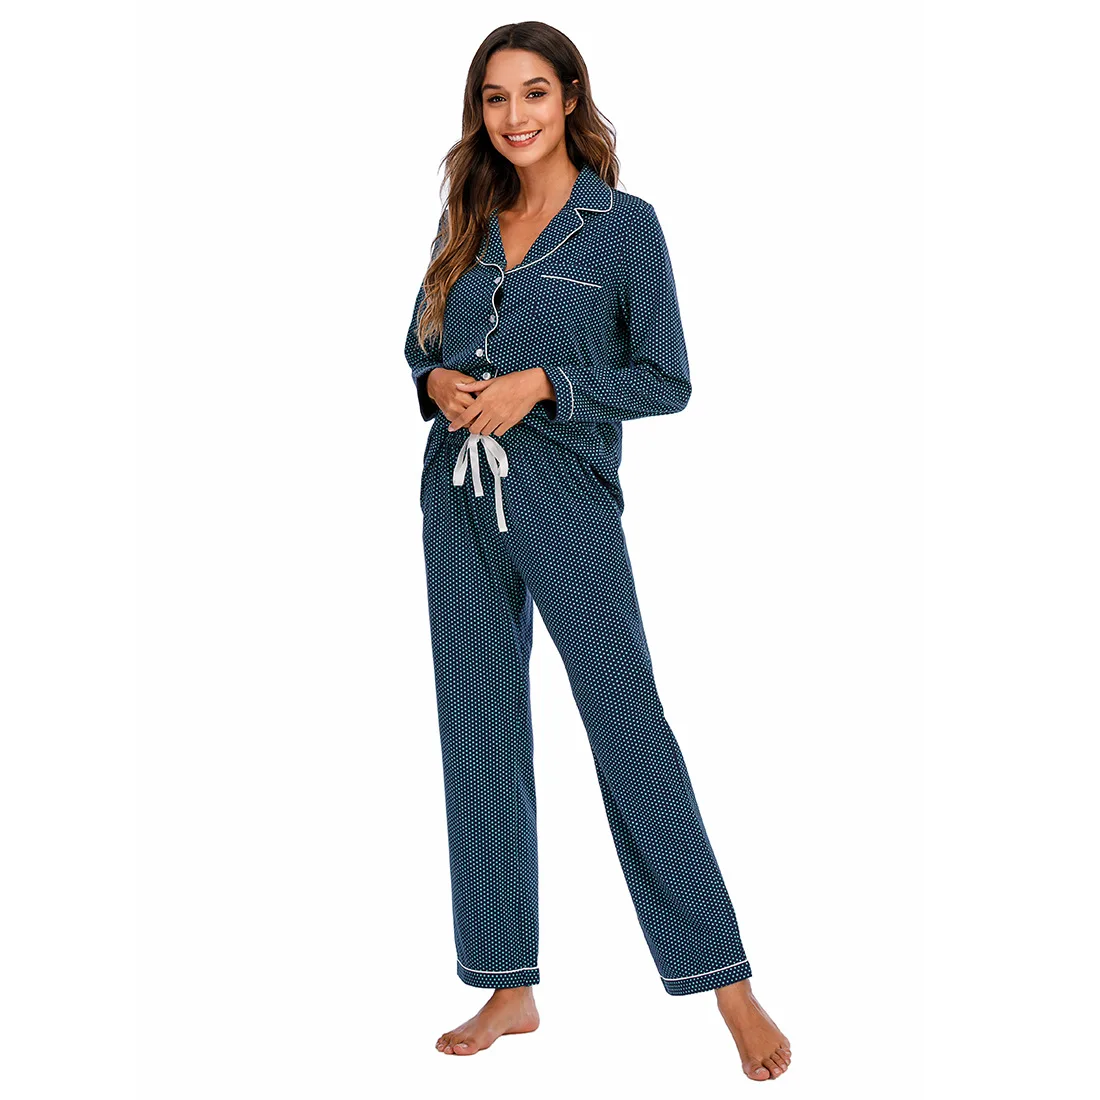 SWOMOG Women’s Pajamas Set Long Sleeve Sleepwear with Long Pants Soft Modal Loungewear Pj Set 